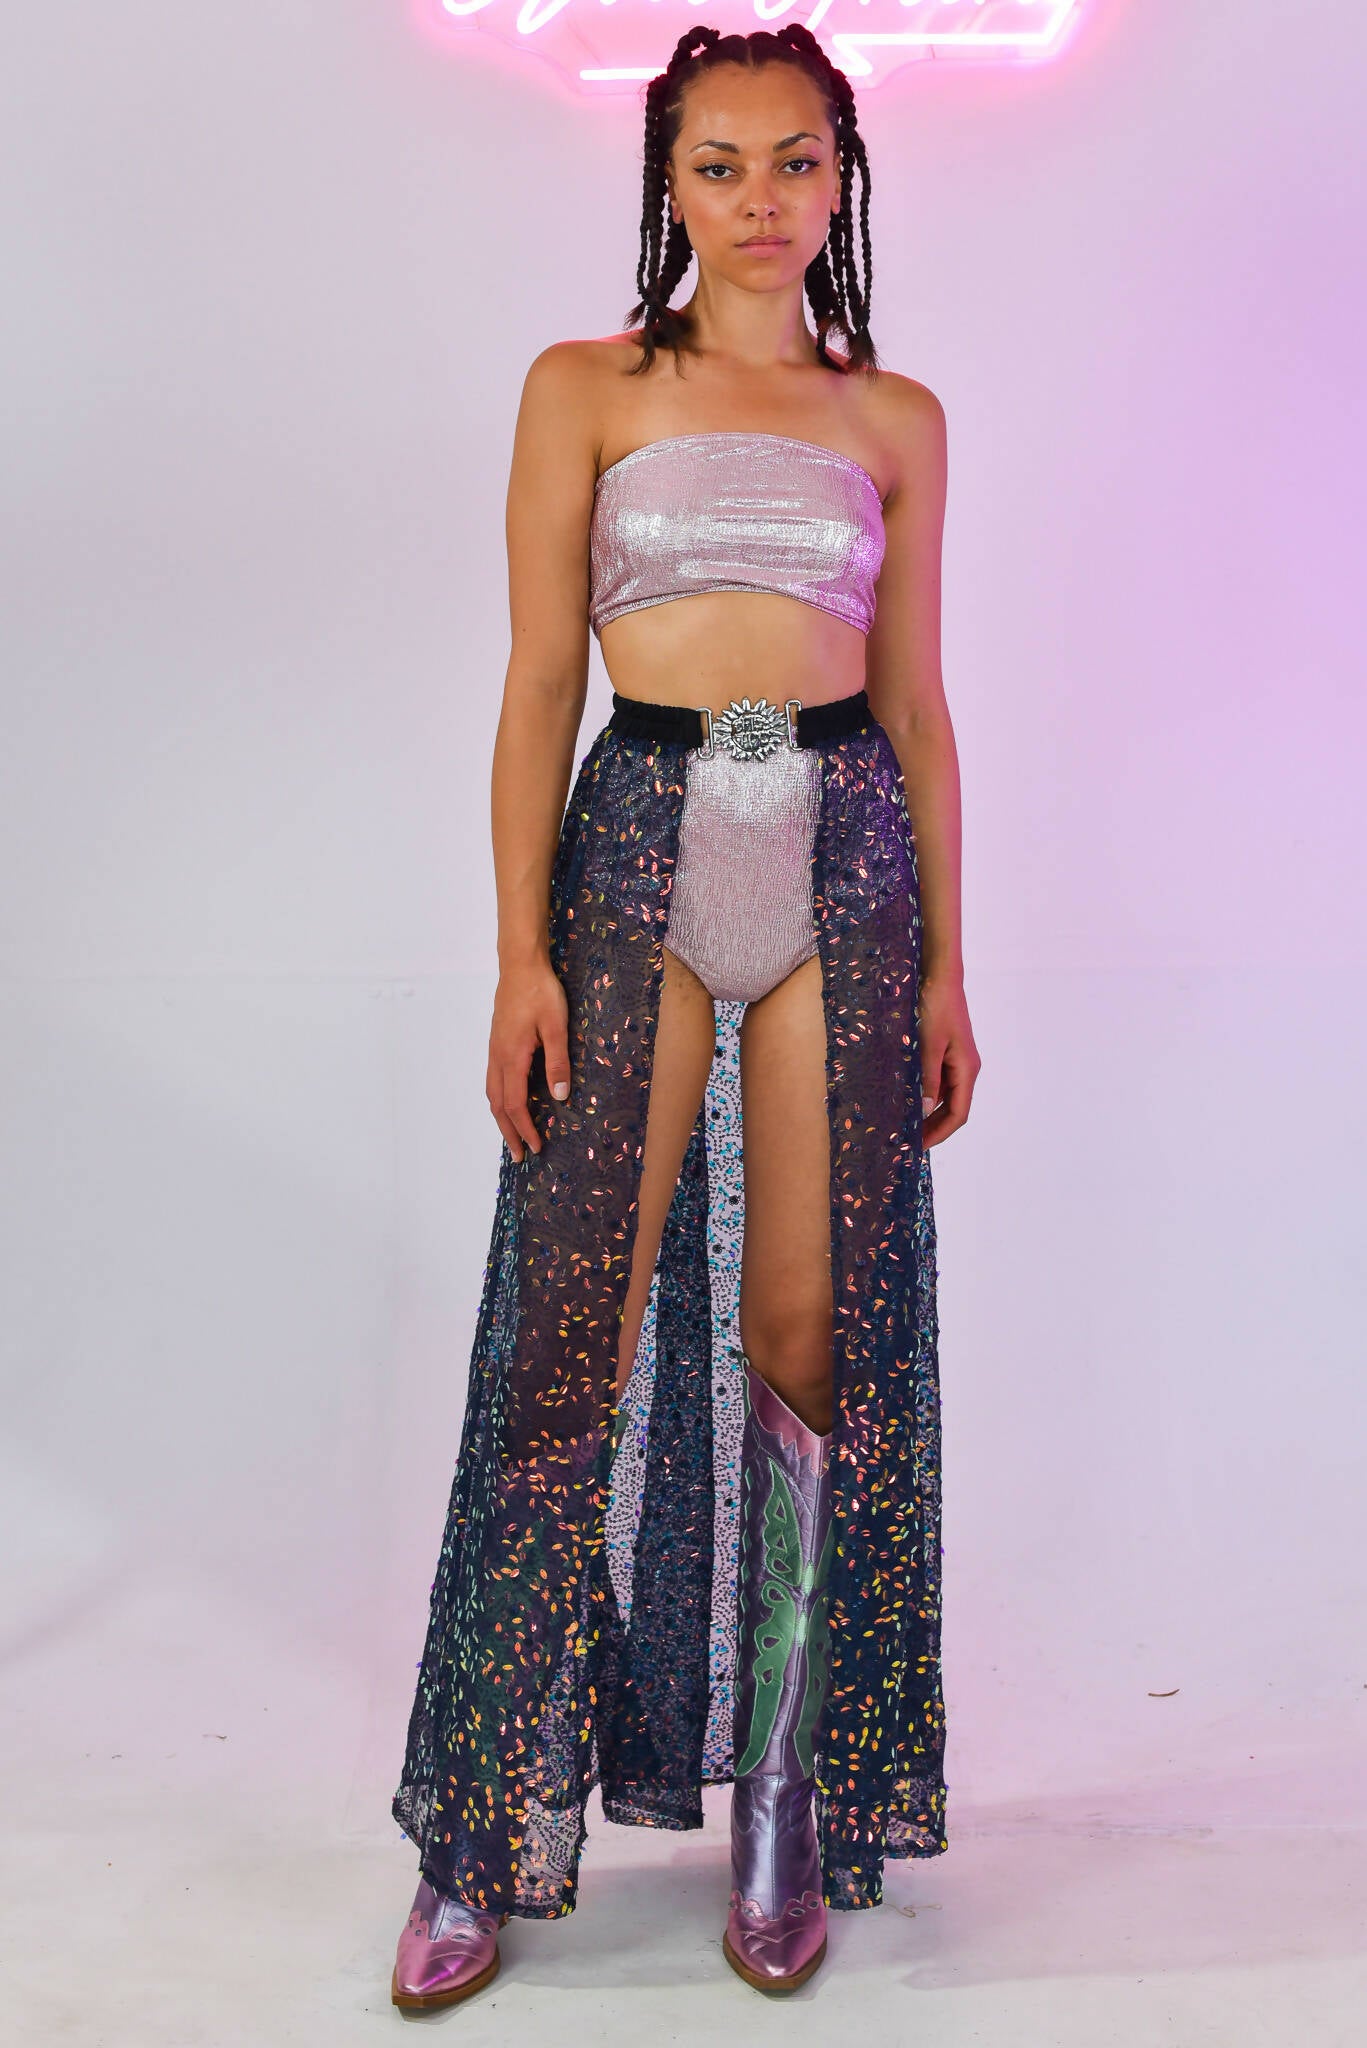 Star Gazer Pink Bandeau Top | Rave &amp; Festival Fashion